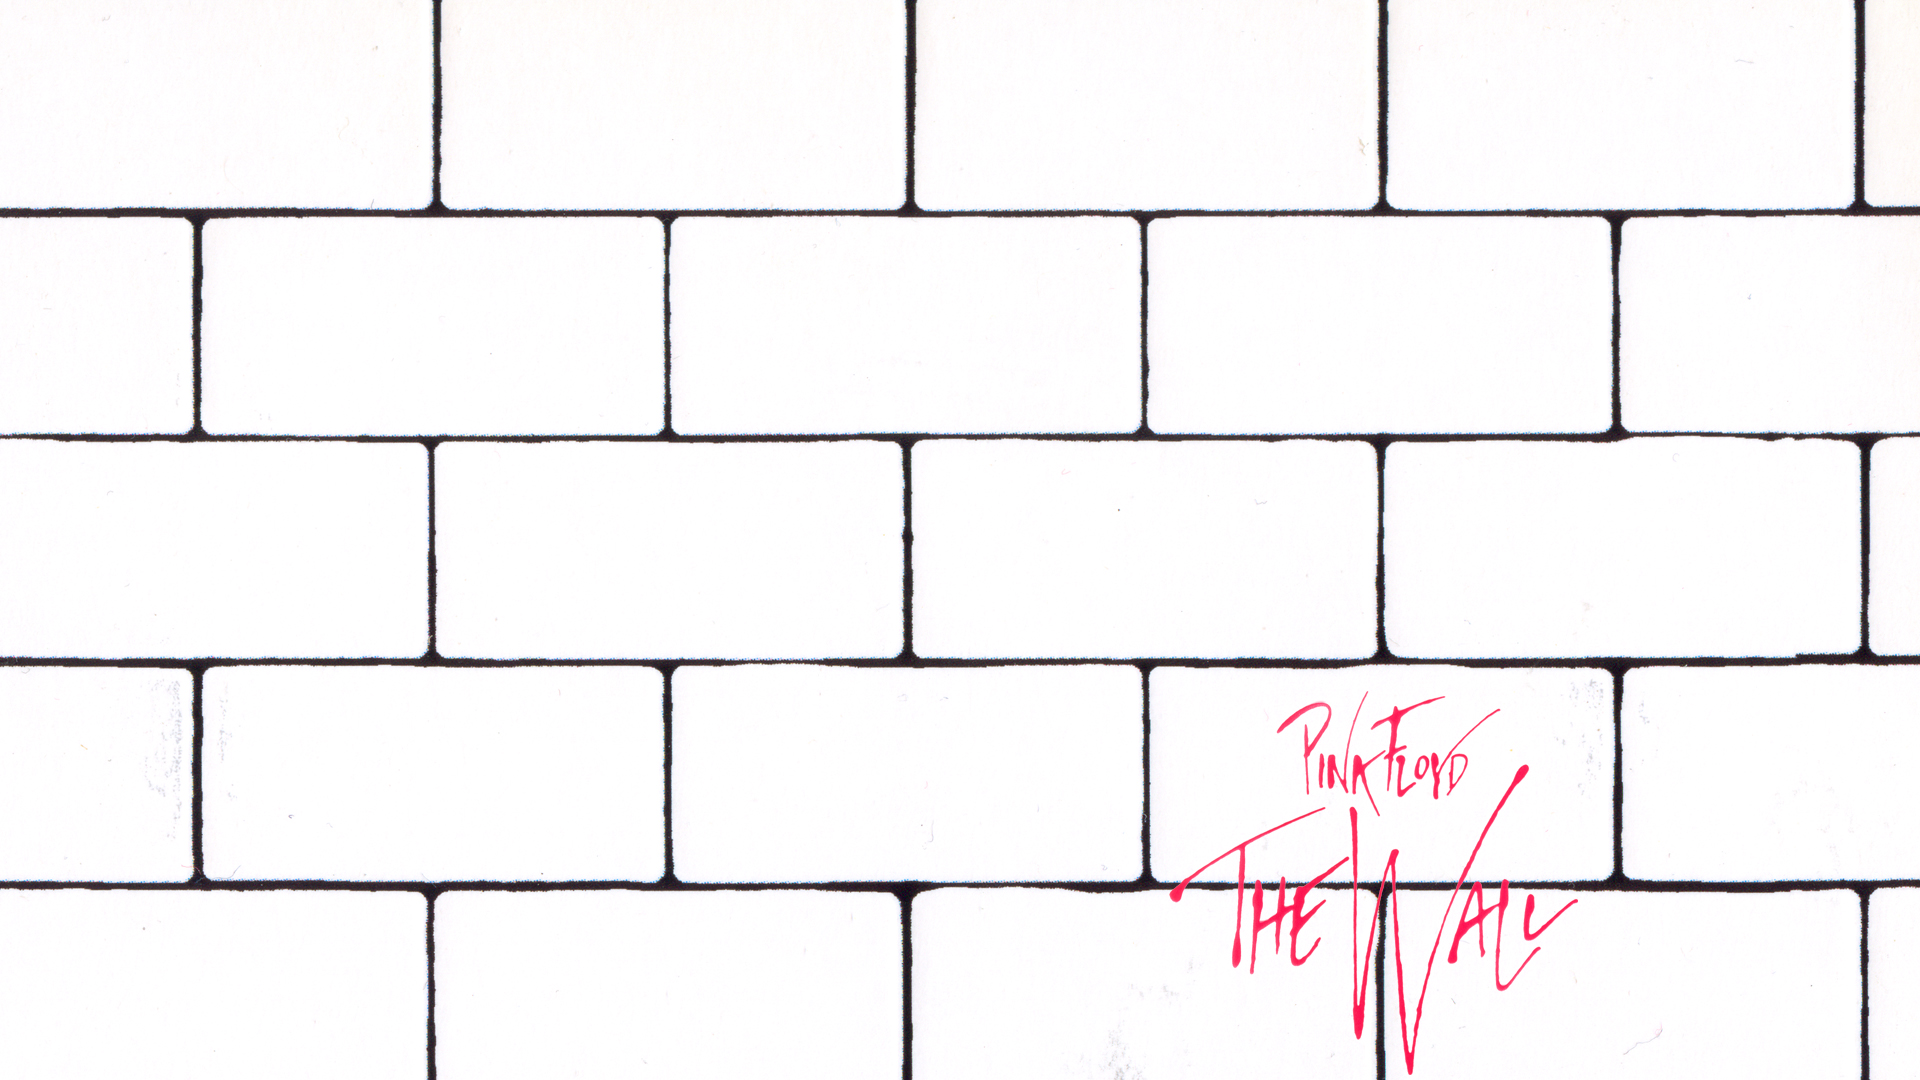 Ps3 Pink Floyd The Wall Jpg